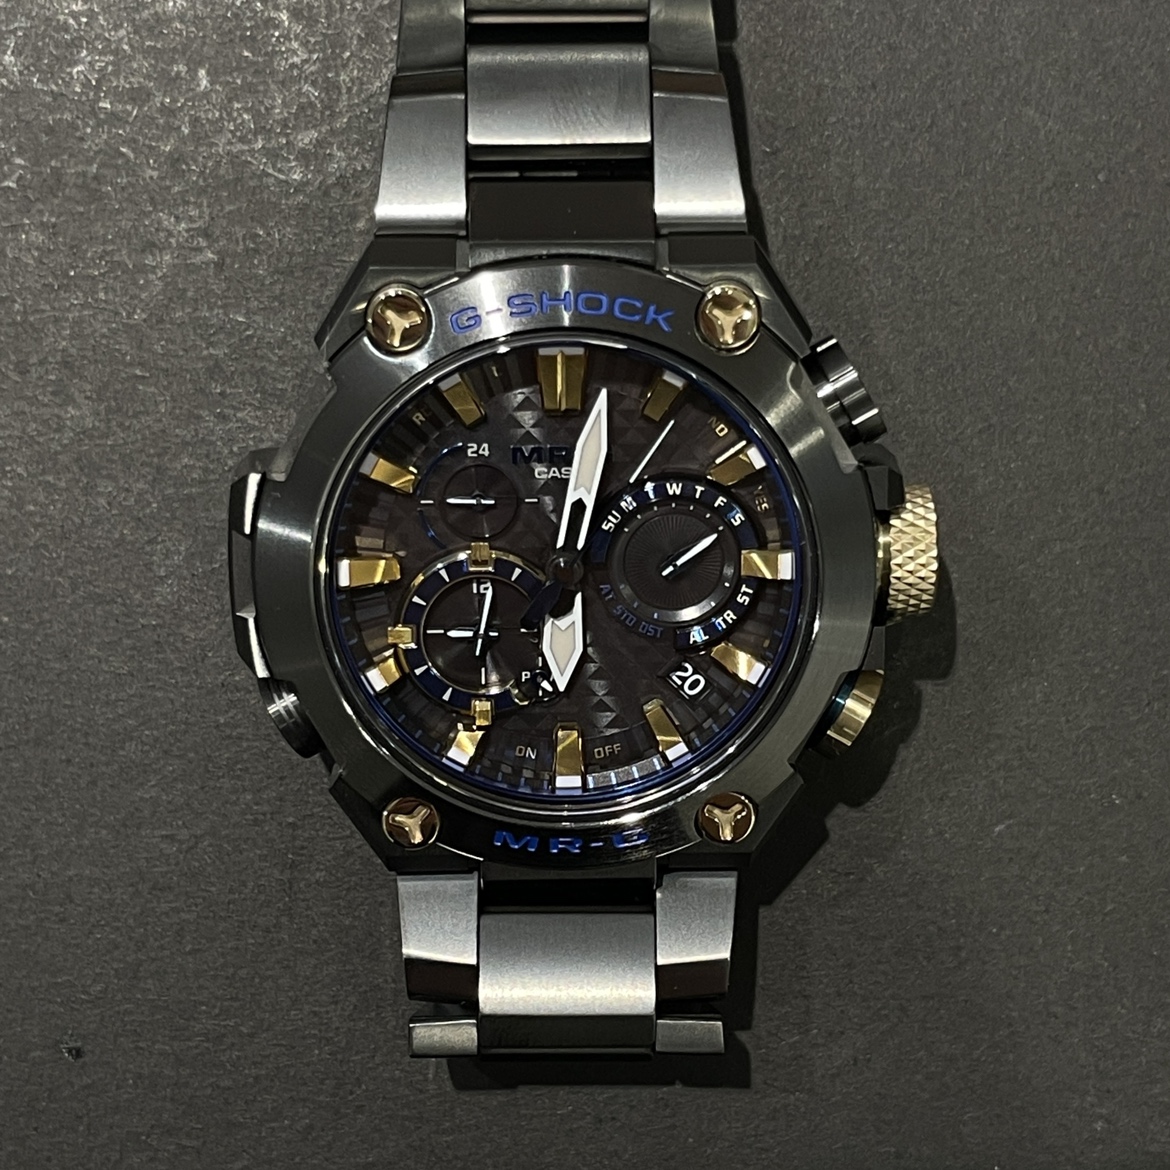 G-SHOCKのMRG-B2000B-1AJR 勝色 チタン Bluetooth搭載 電波ソーラー腕時計の買取実績です。